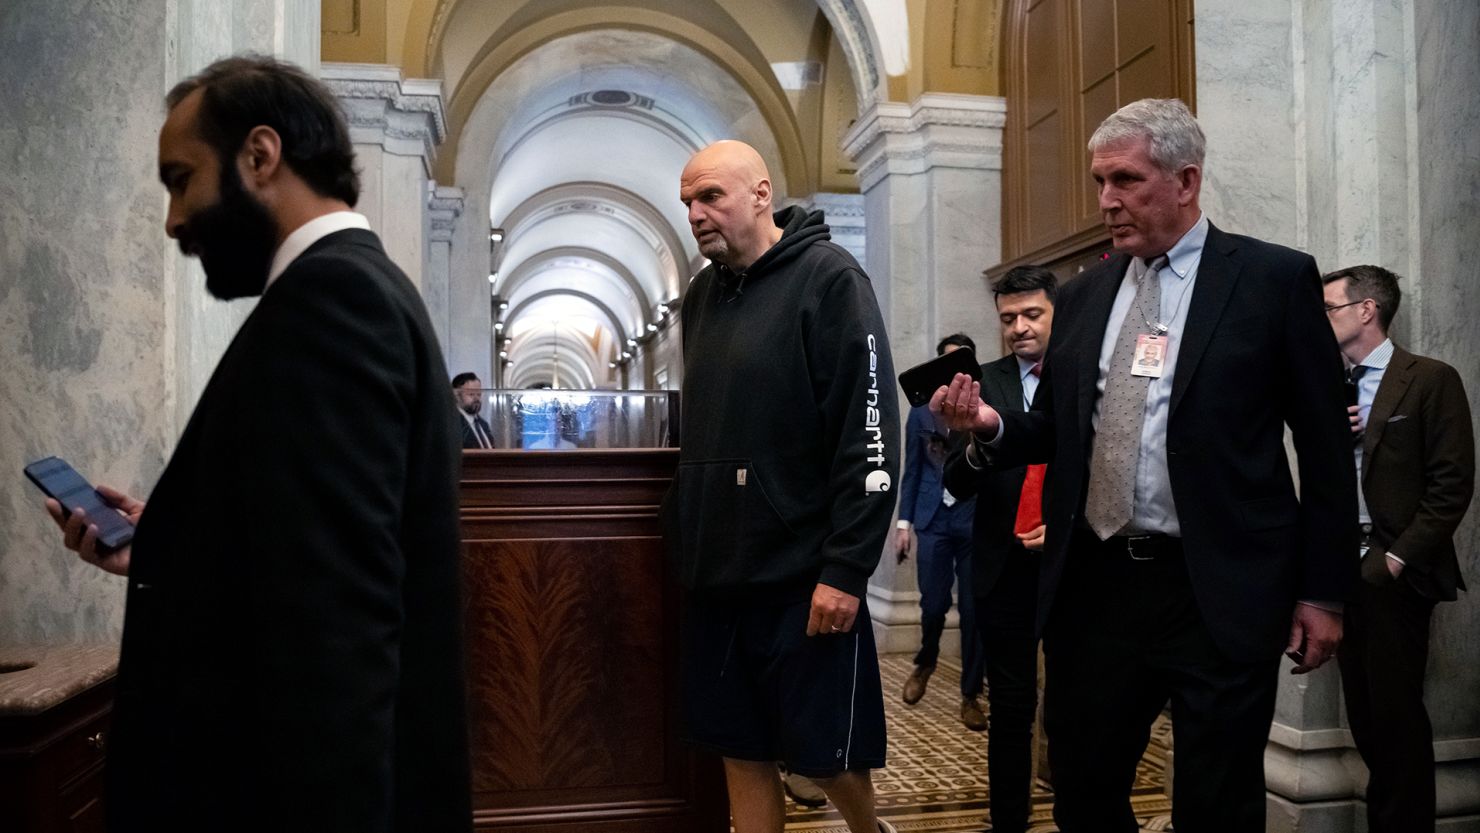 Senator John Fetterman arrives at the U.S. Capitol after hospitalization for depression in Washington, D.C. on Monday, April 17.